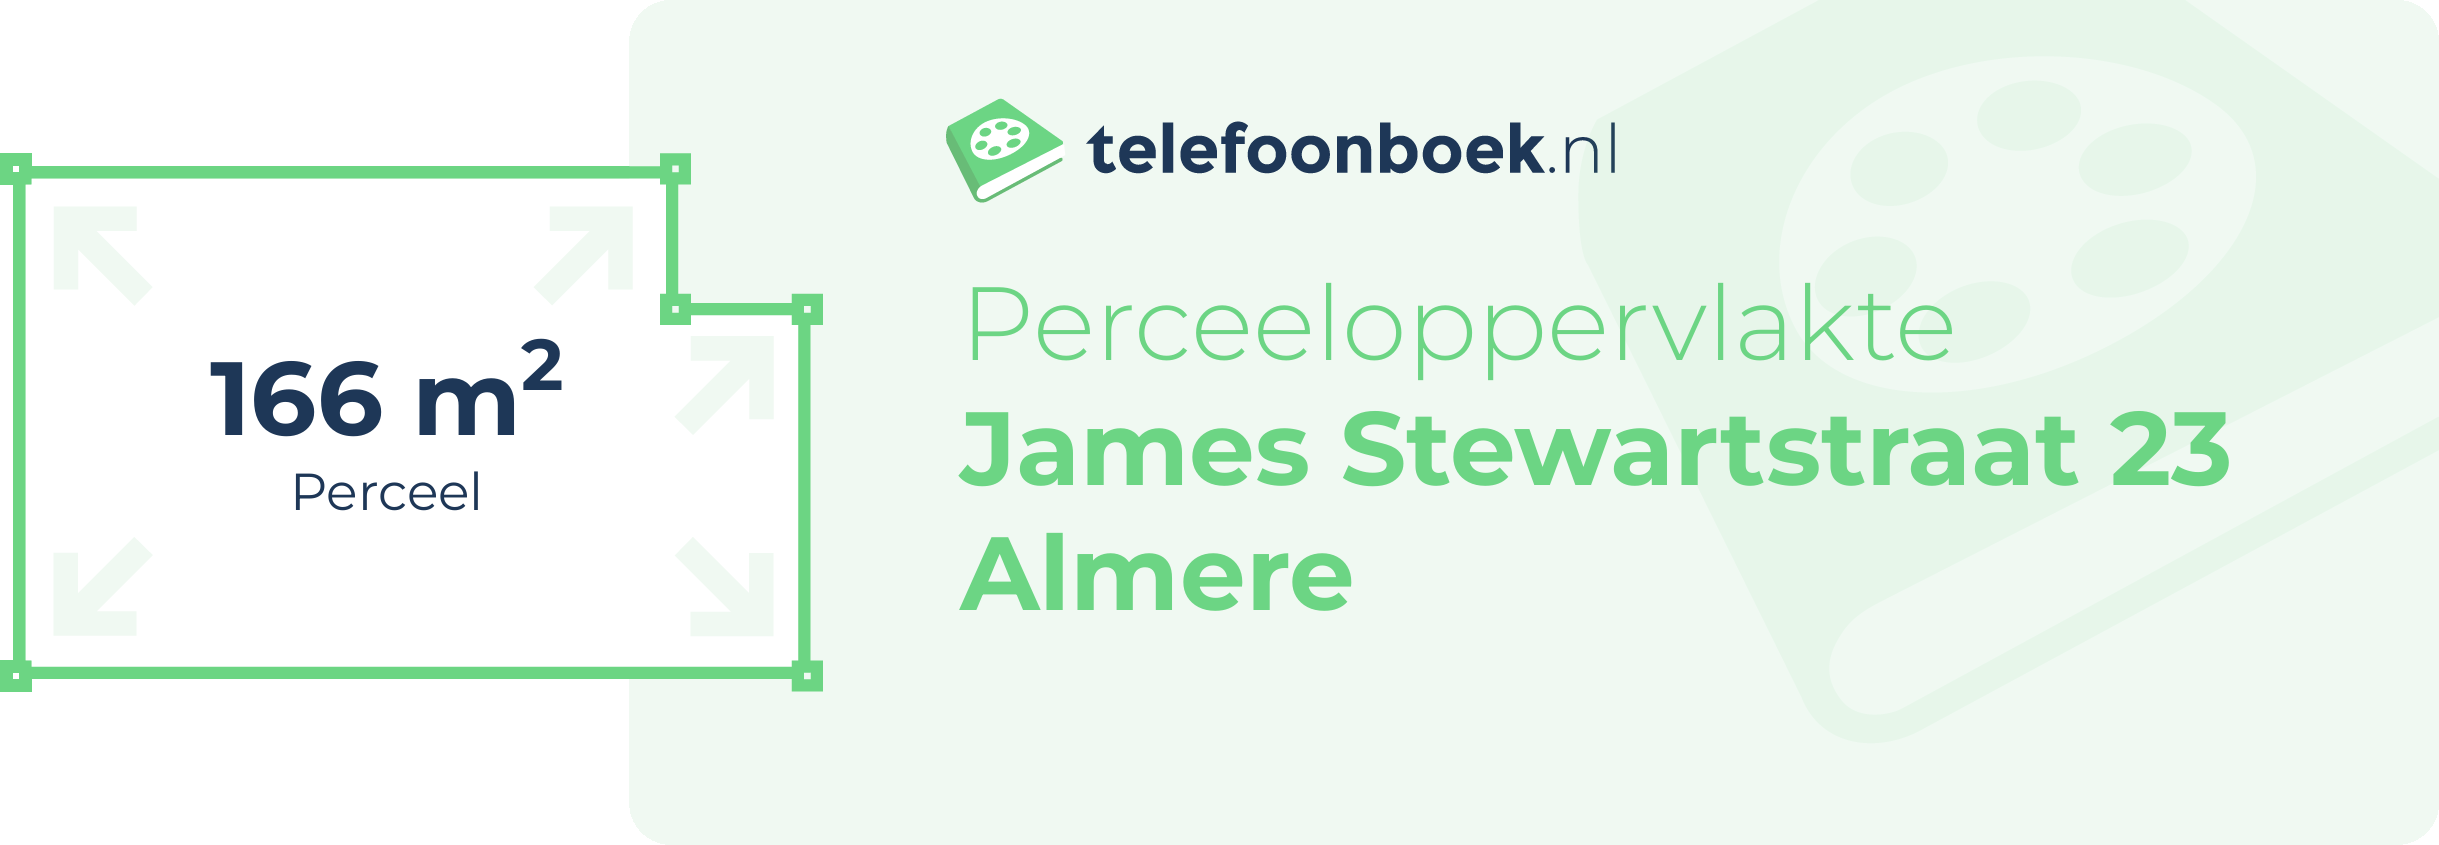 Perceeloppervlakte James Stewartstraat 23 Almere